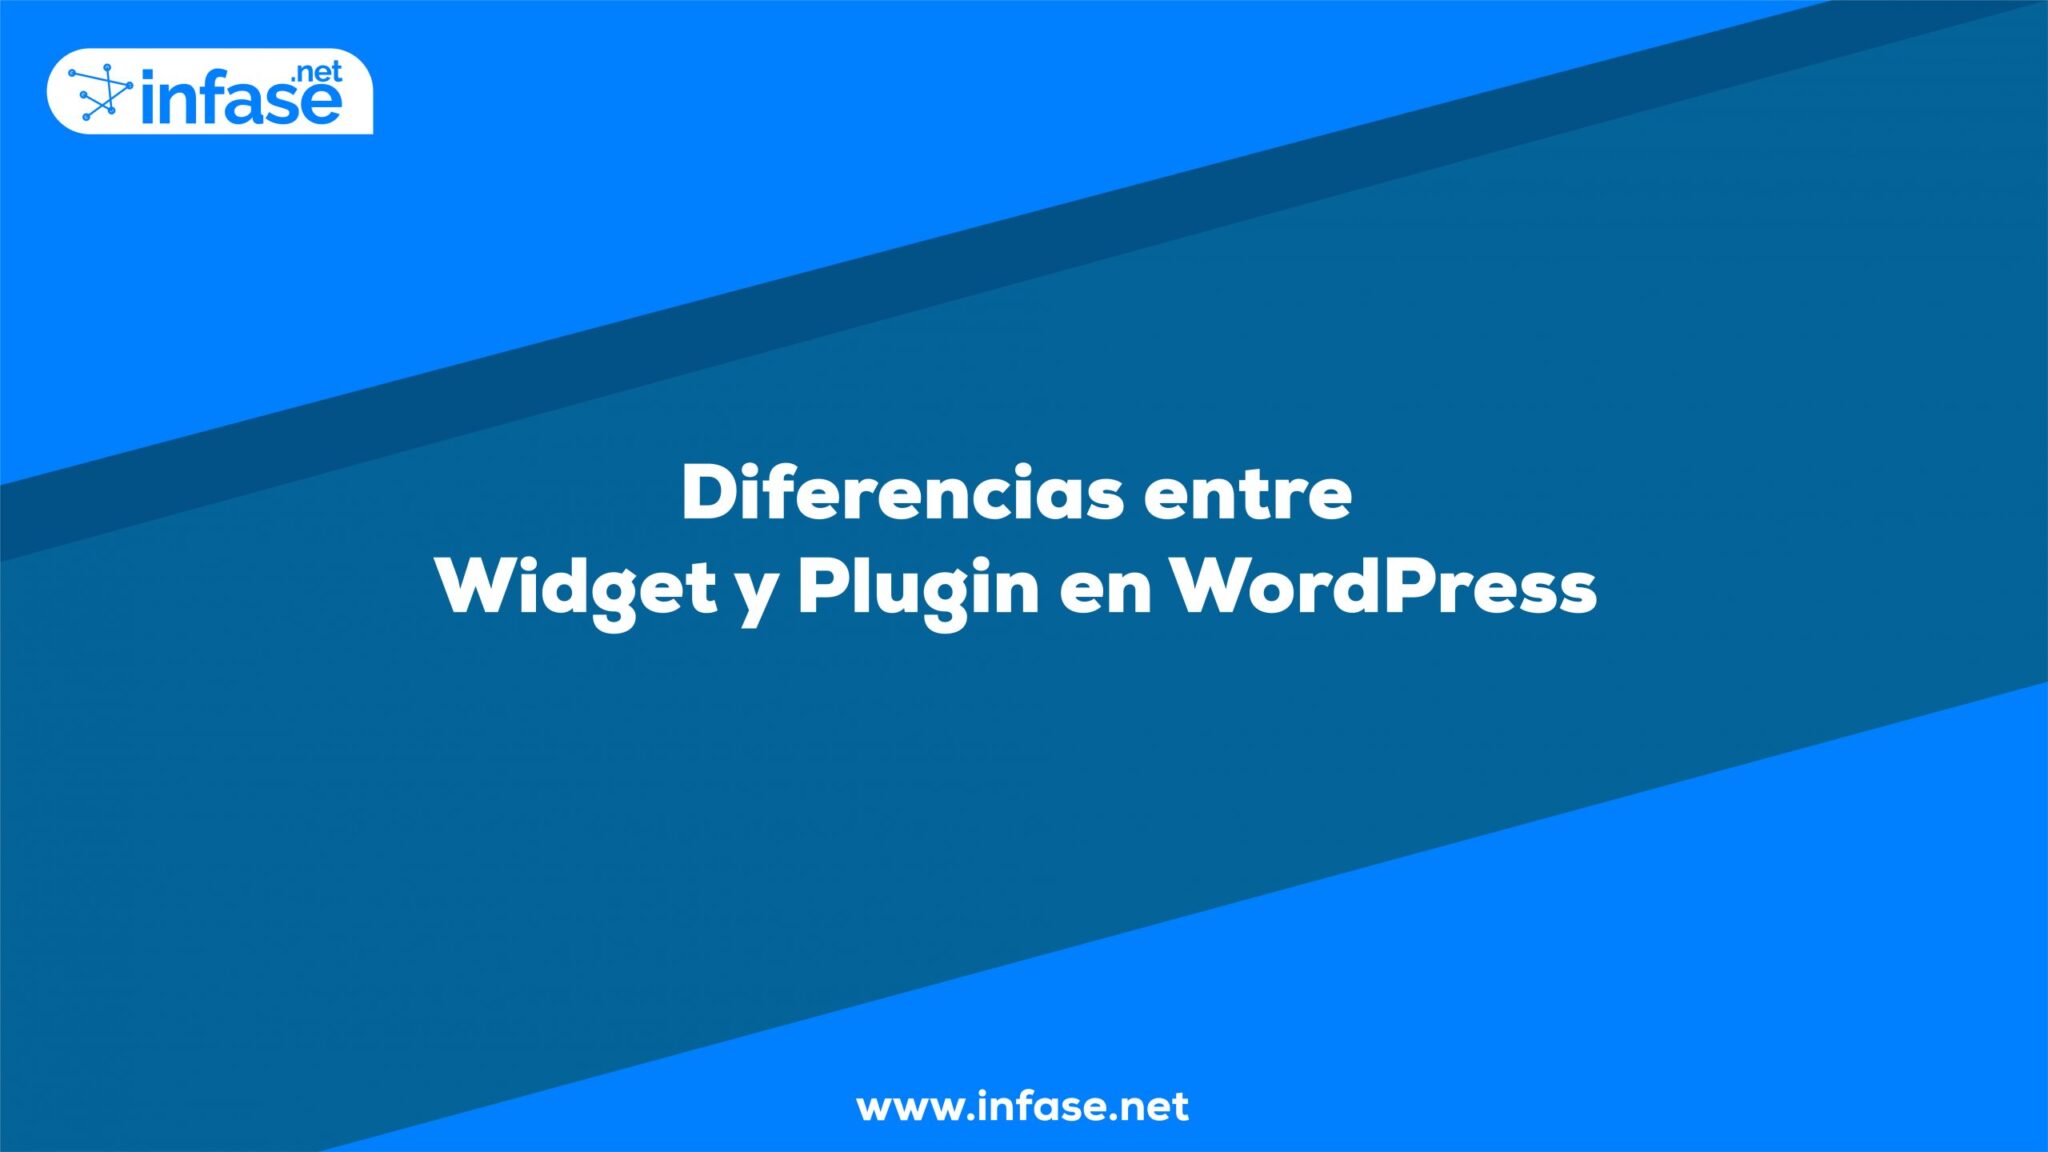 Widgets y los Plugins en WordPress